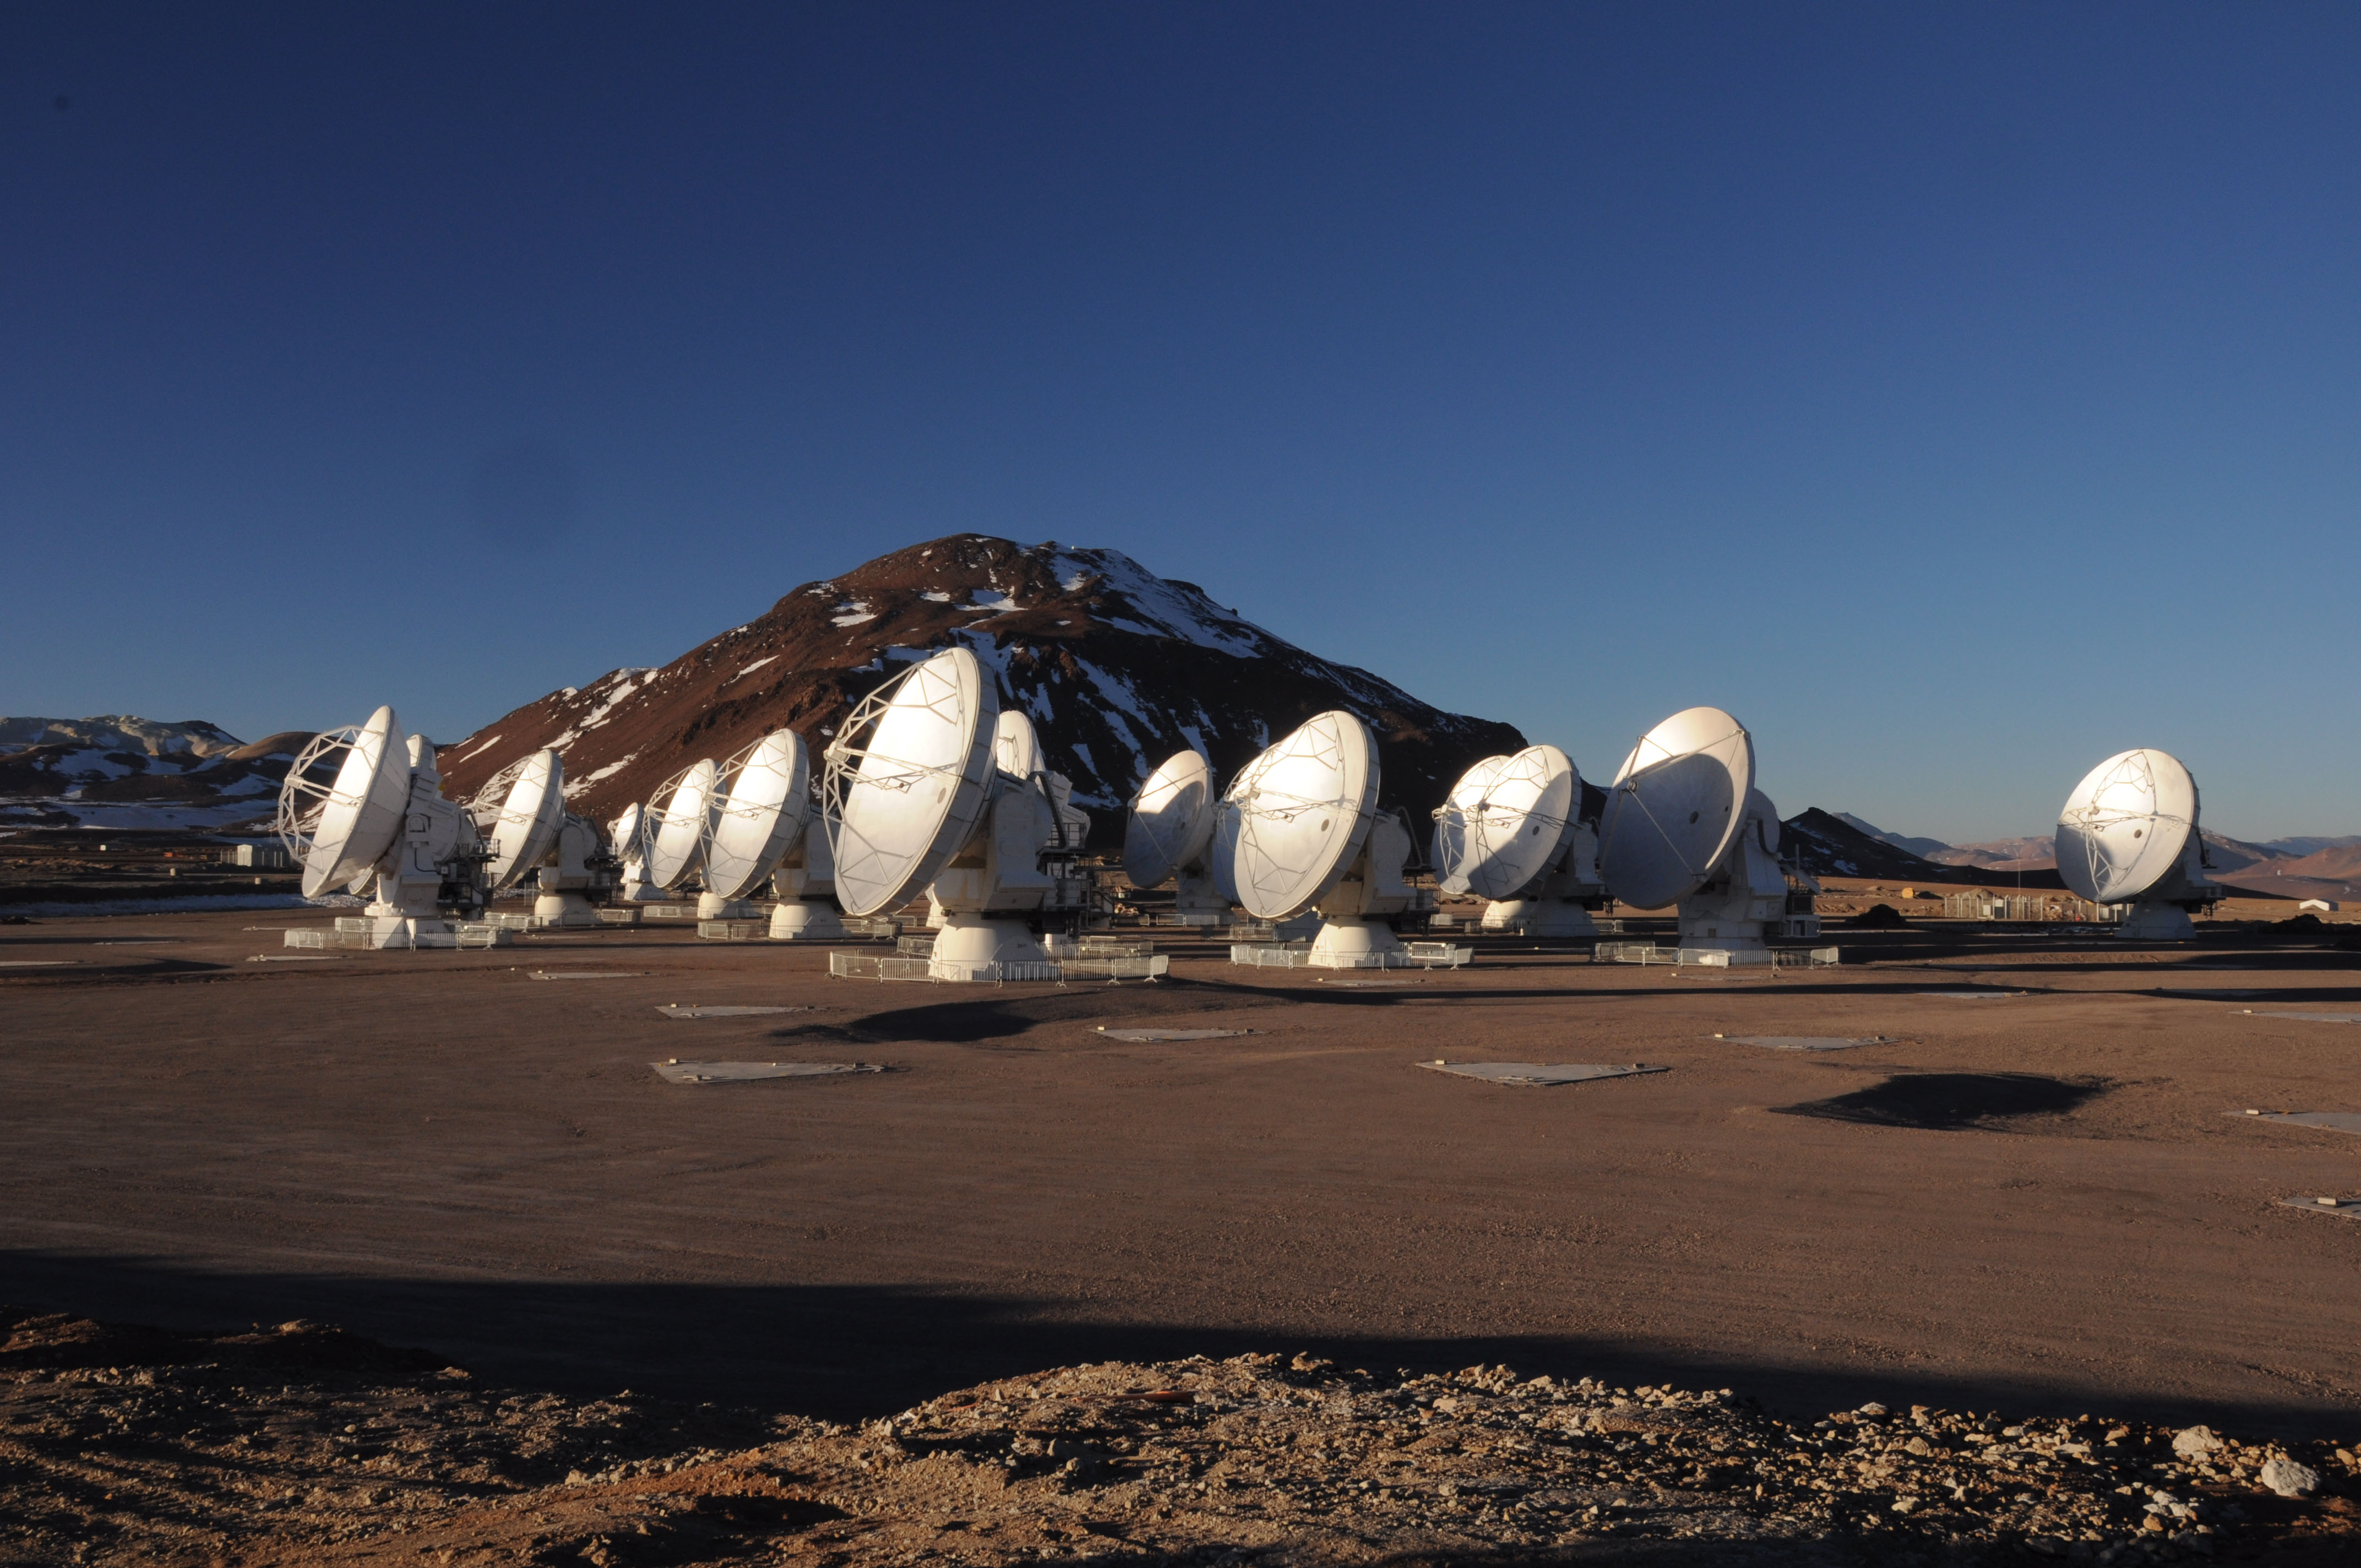 Satellite telescopes set up on the ground